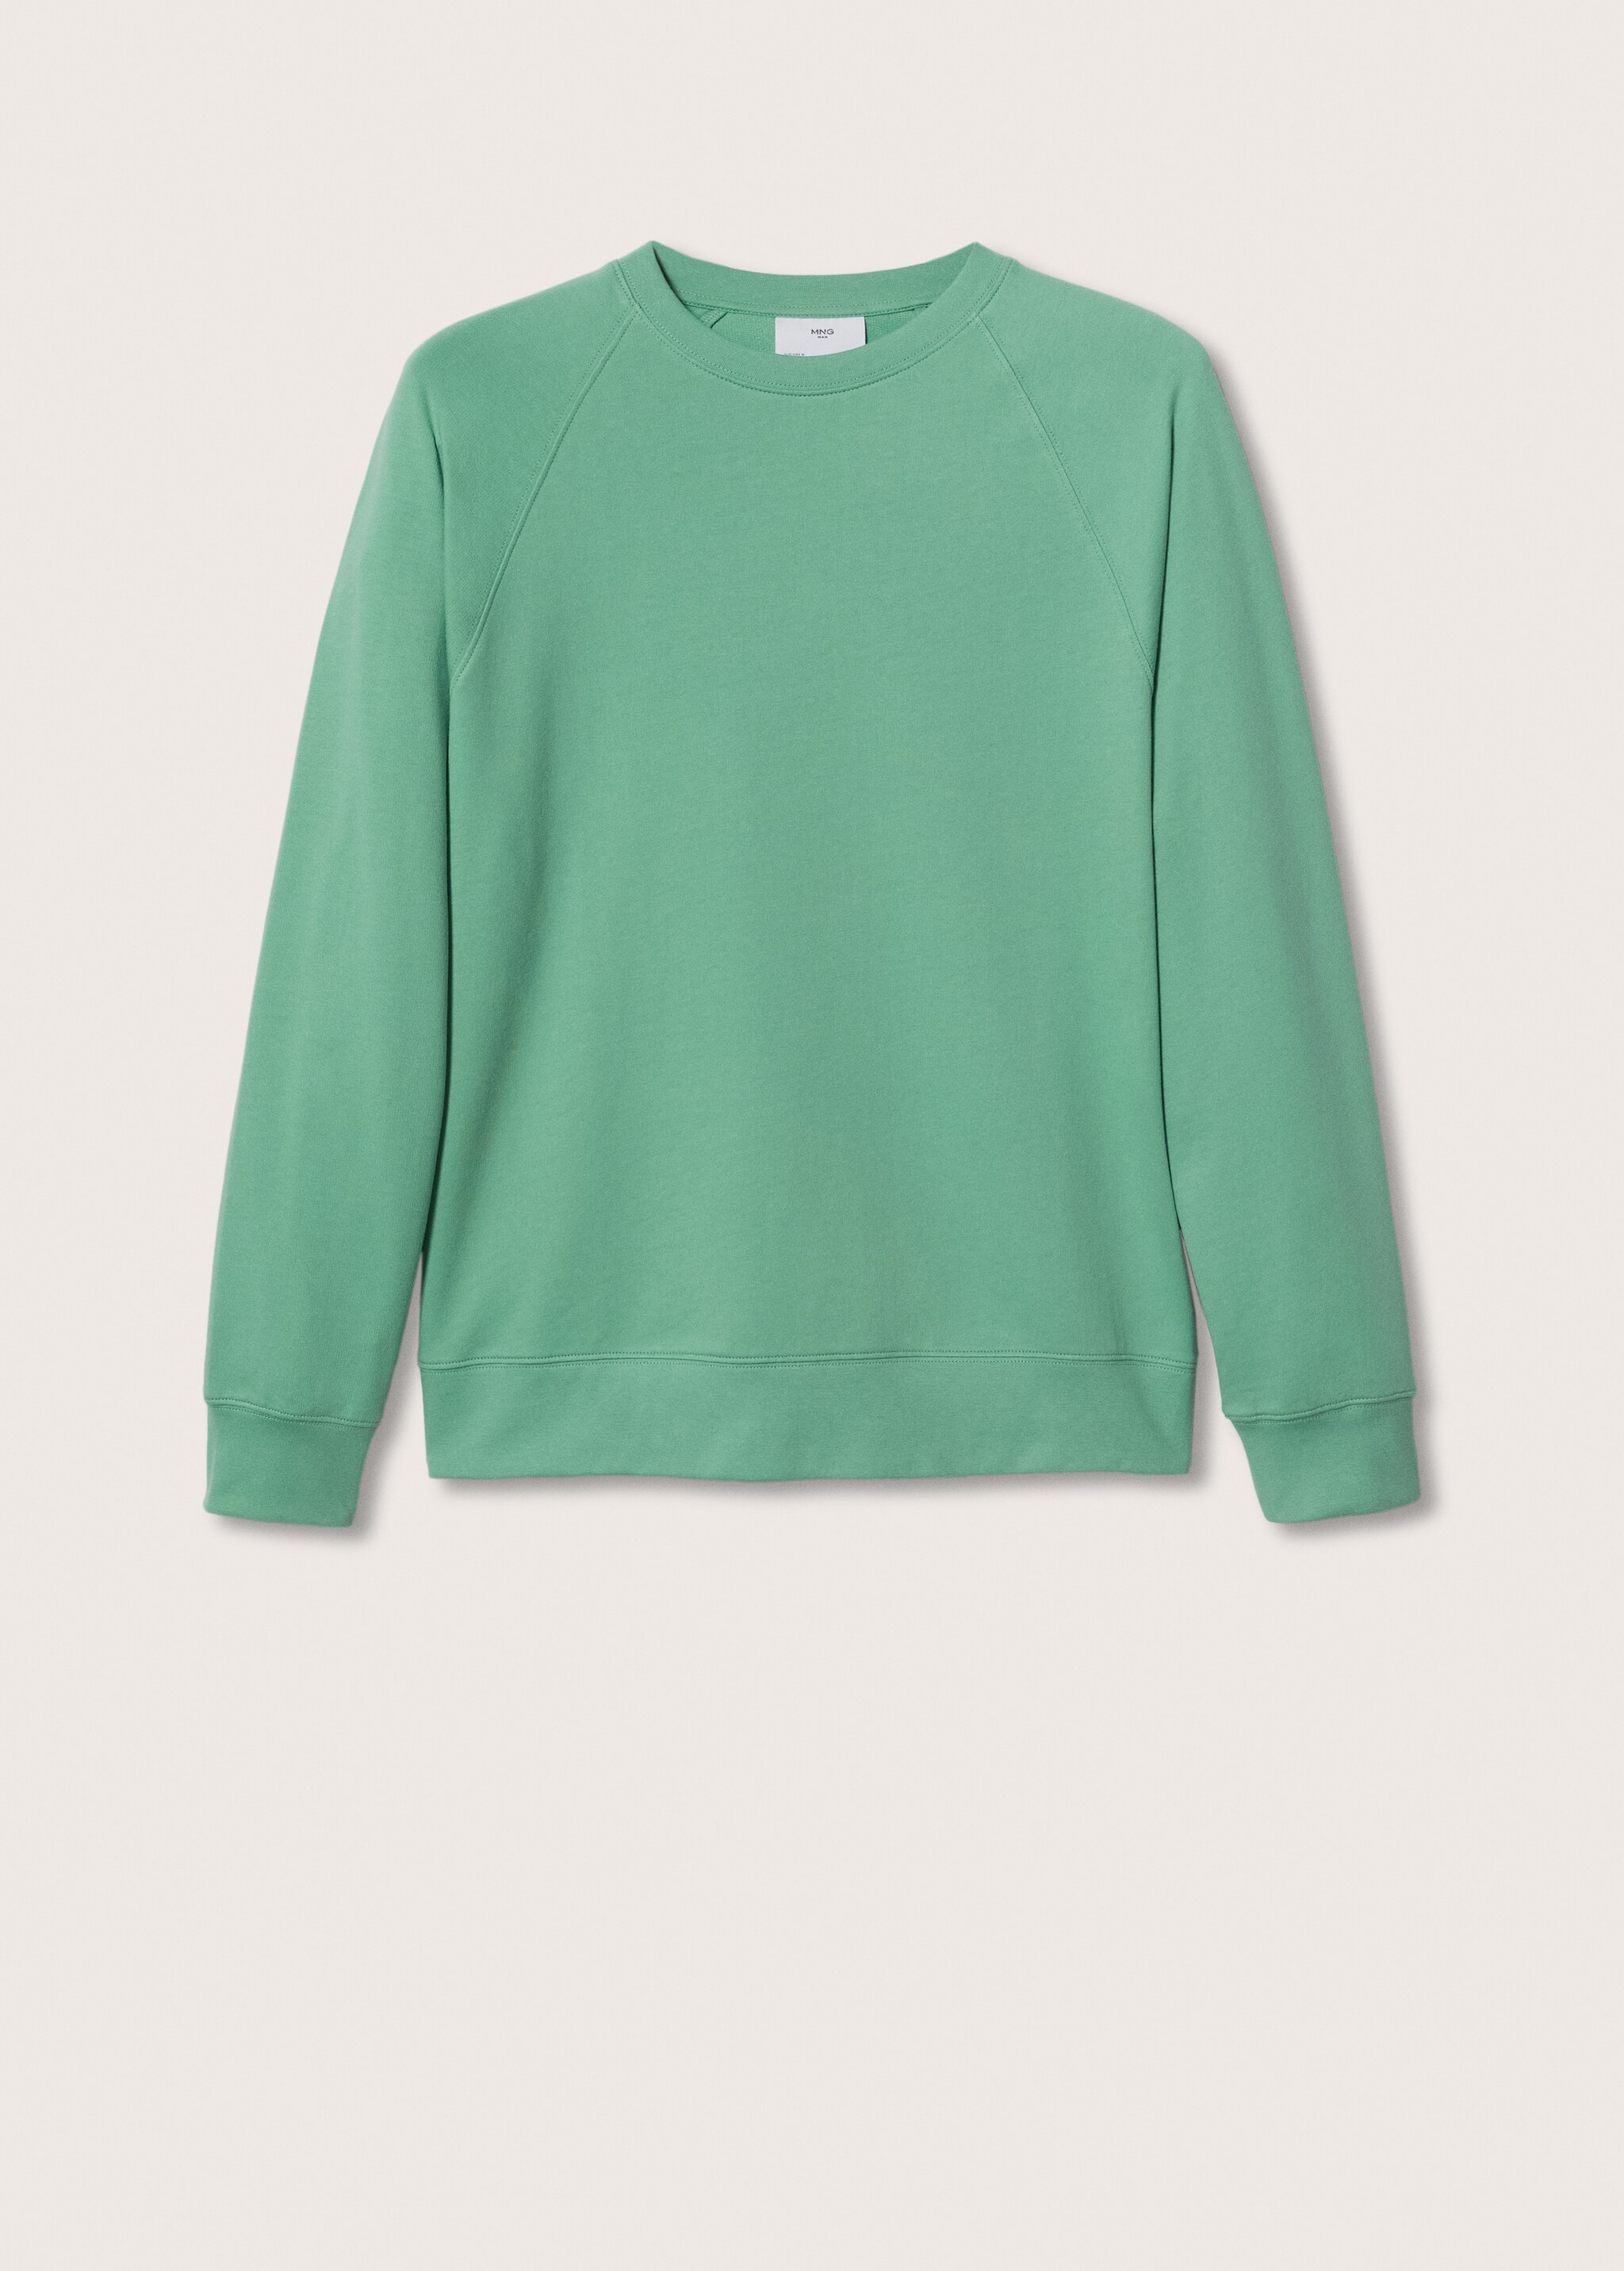 Pamuklu hafif sweatshirt - Modelsiz ürün